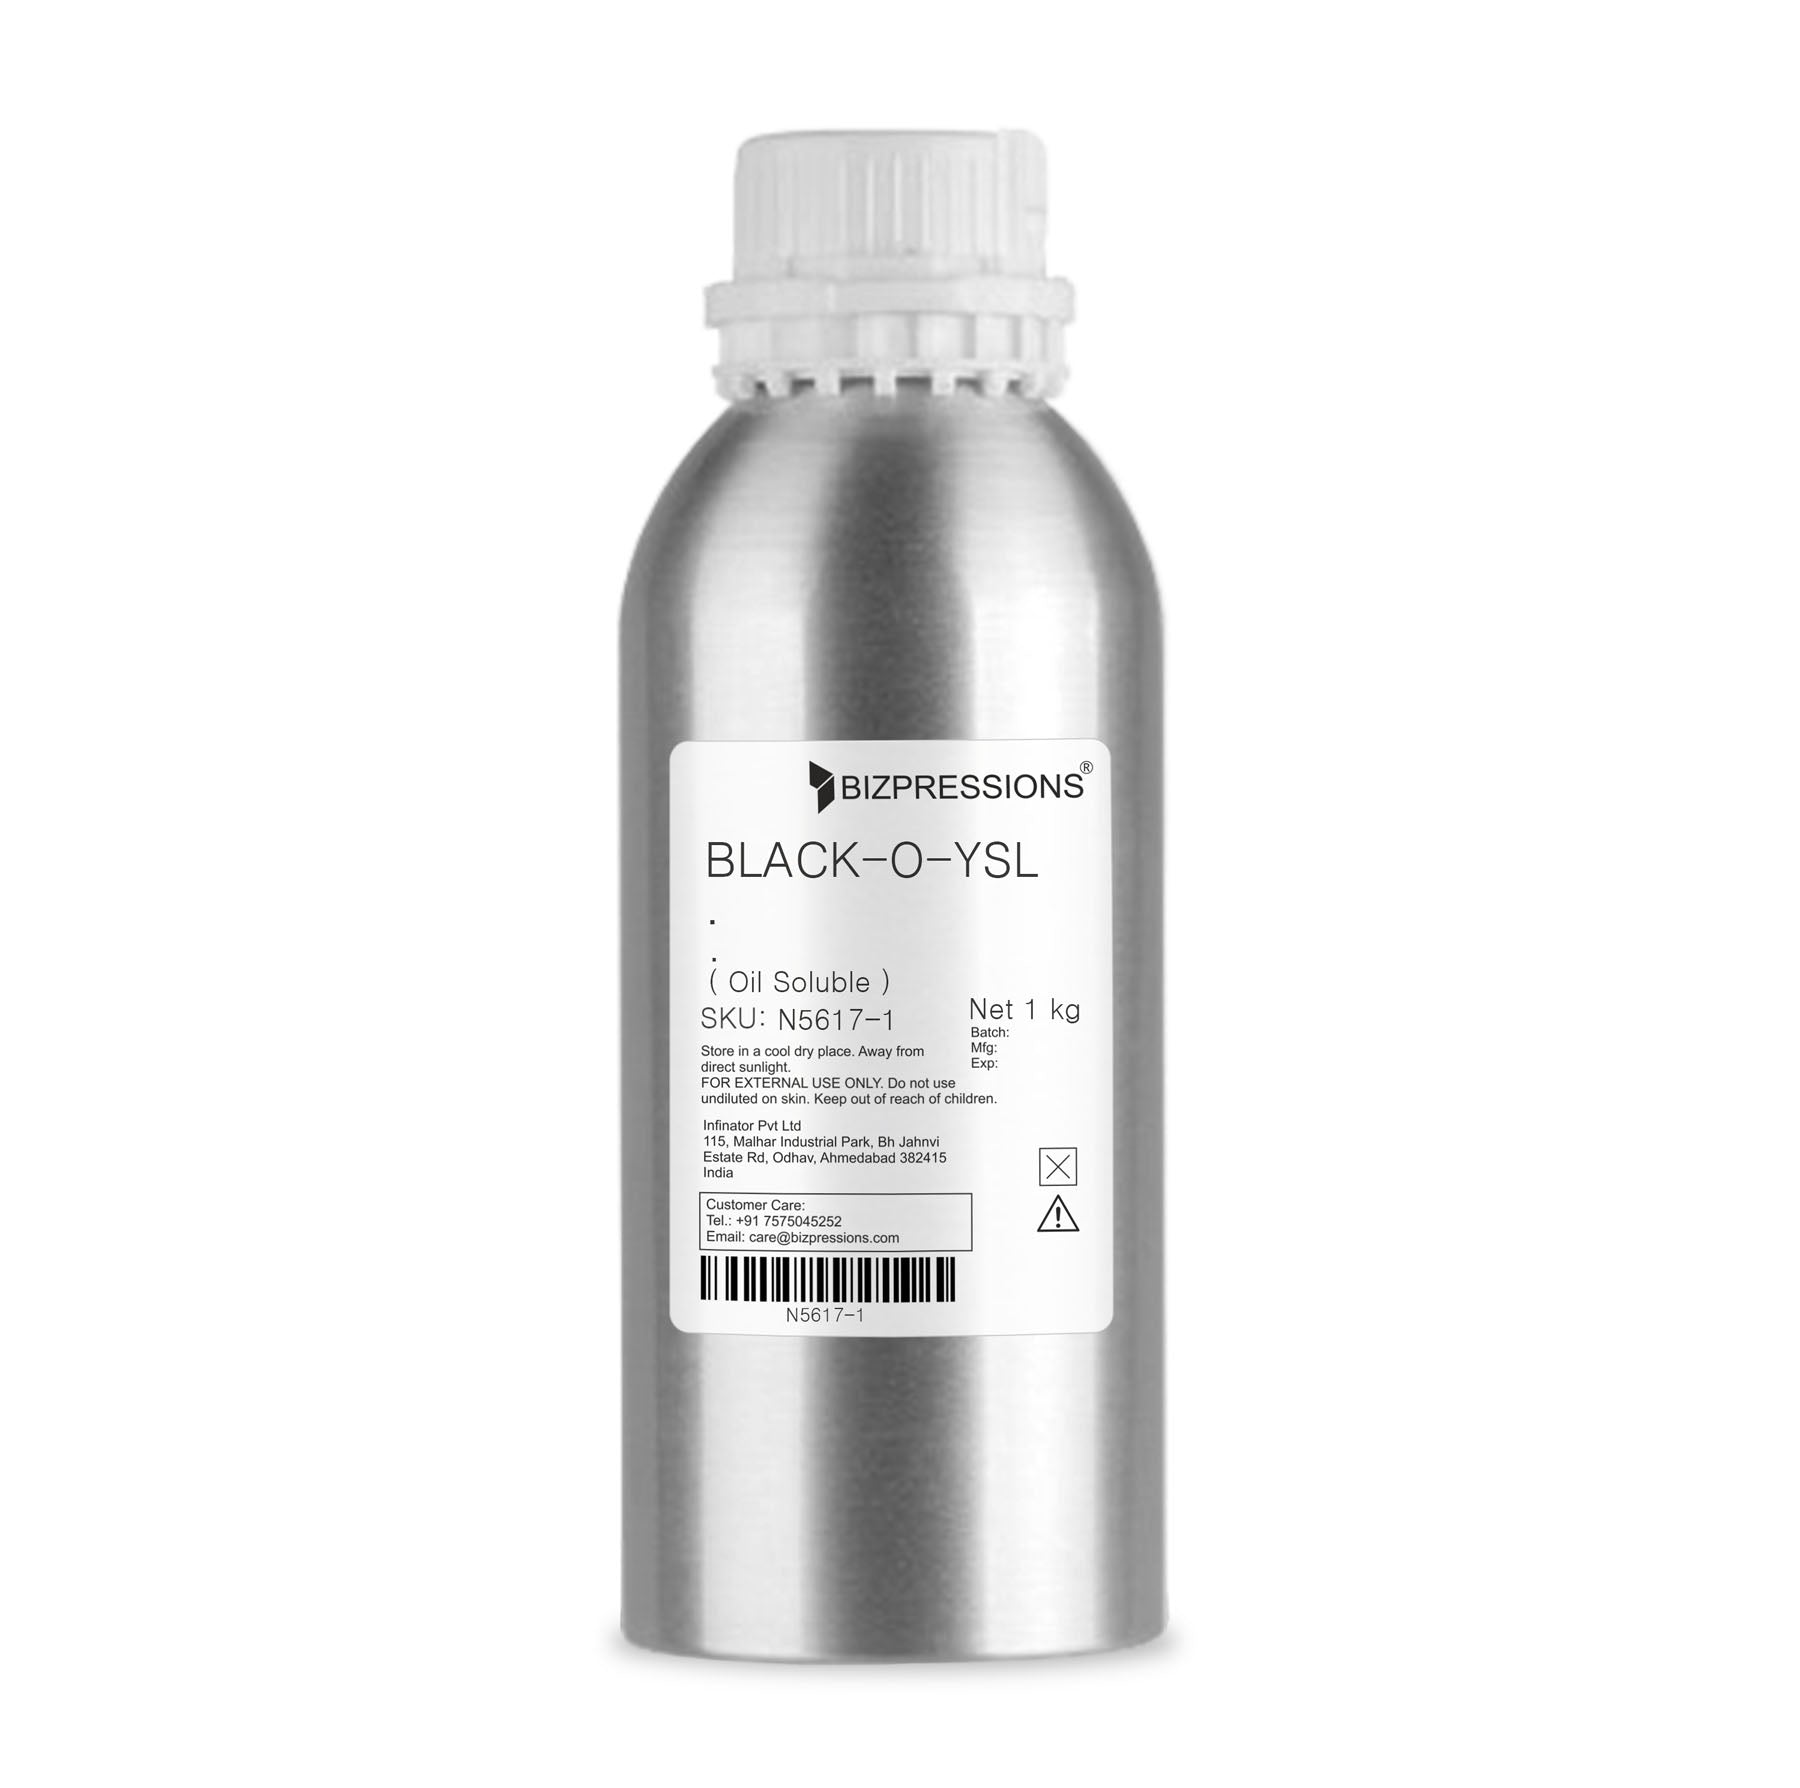 BLACK-O-YSL - Fragrance ( Oil Soluble ) - 1 kg